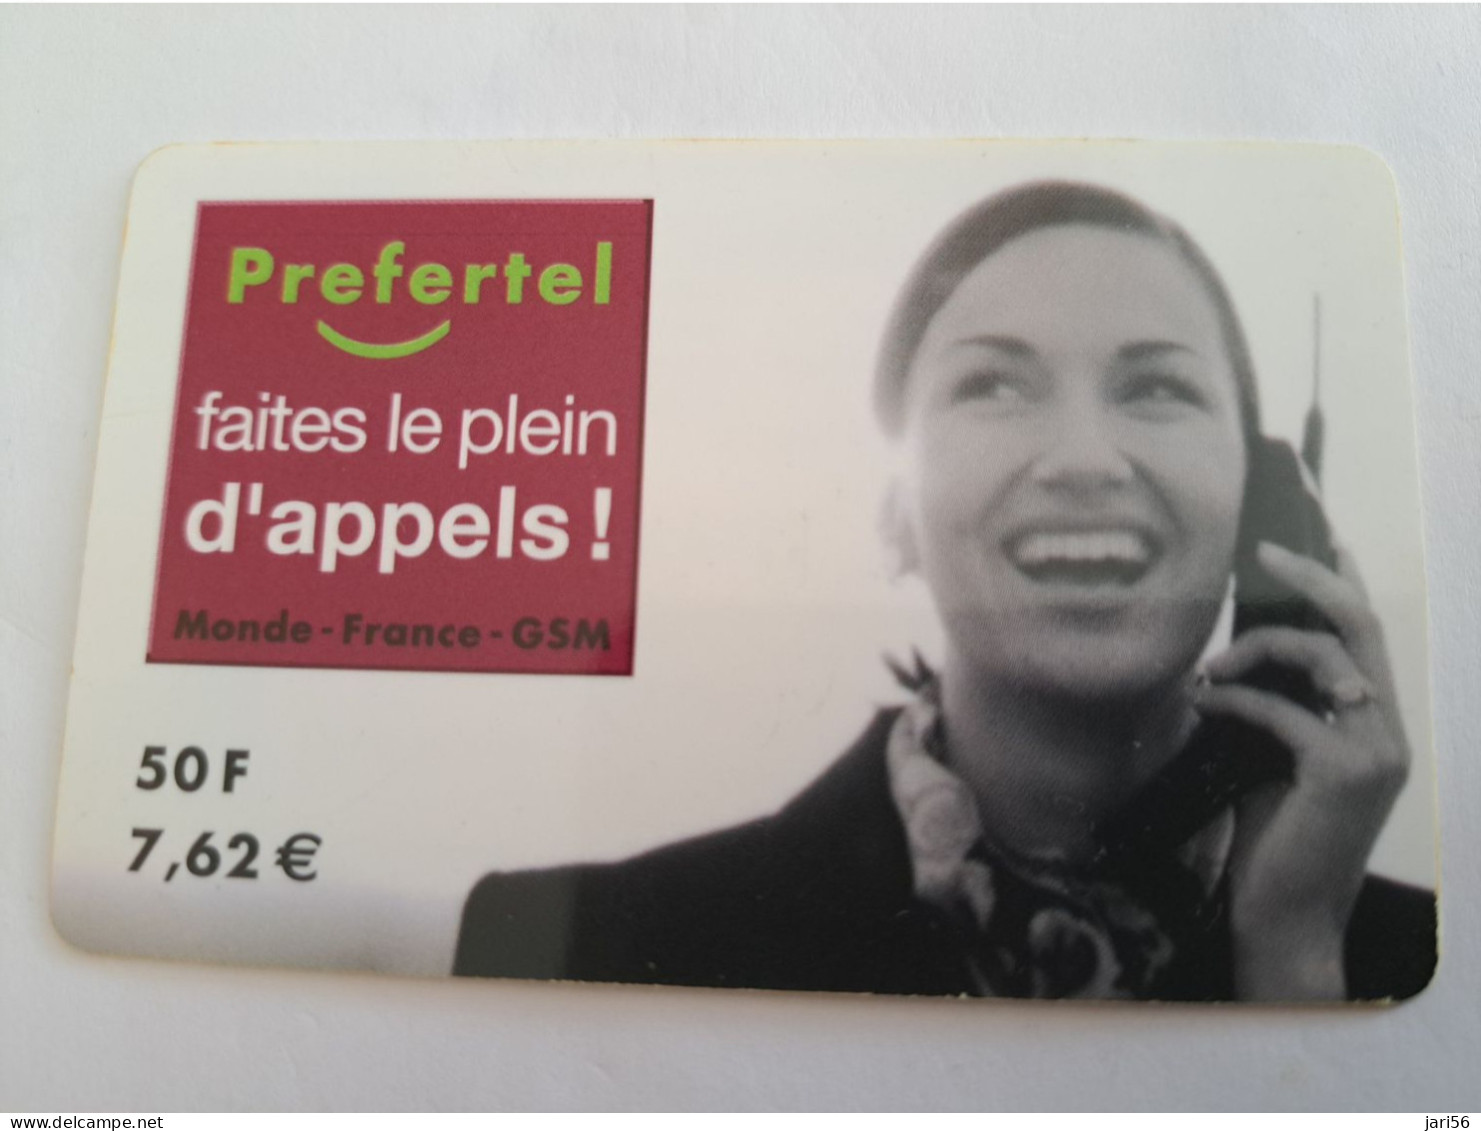 FRANCE/FRANKRIJK  / € 7,62/ PREFERTEL/ LADY ON PHONE    / PREPAID  USED         ** 14734** - Prepaid: Mobicartes